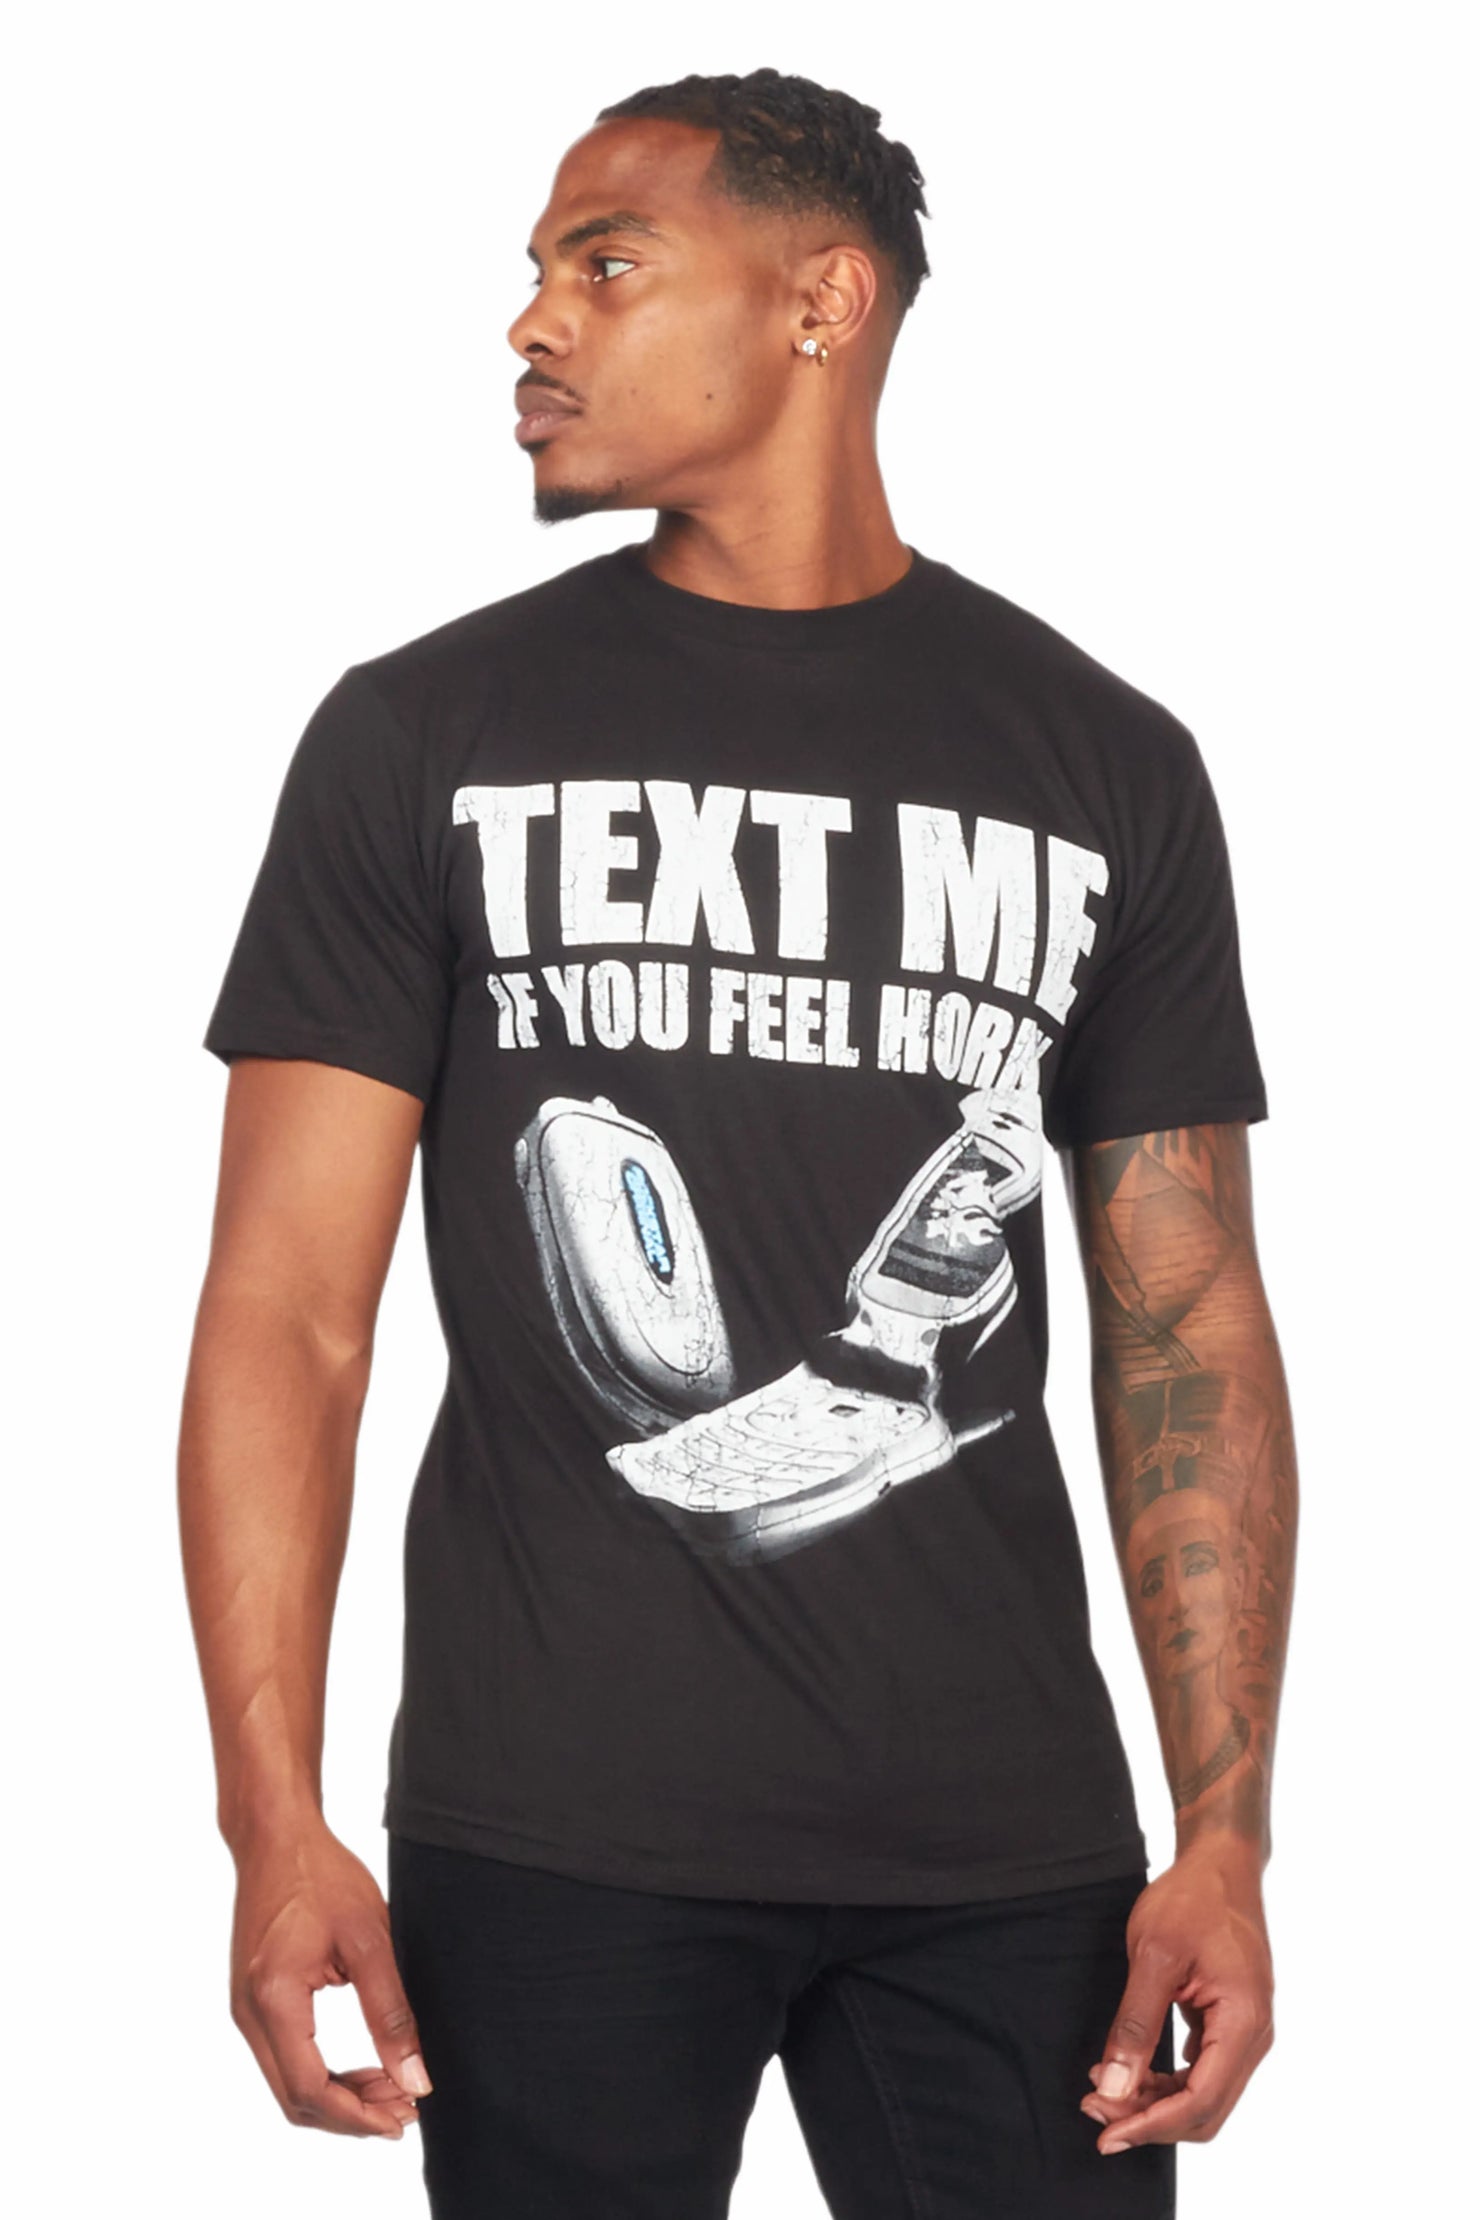 Textme Black Graphic T-Shirt